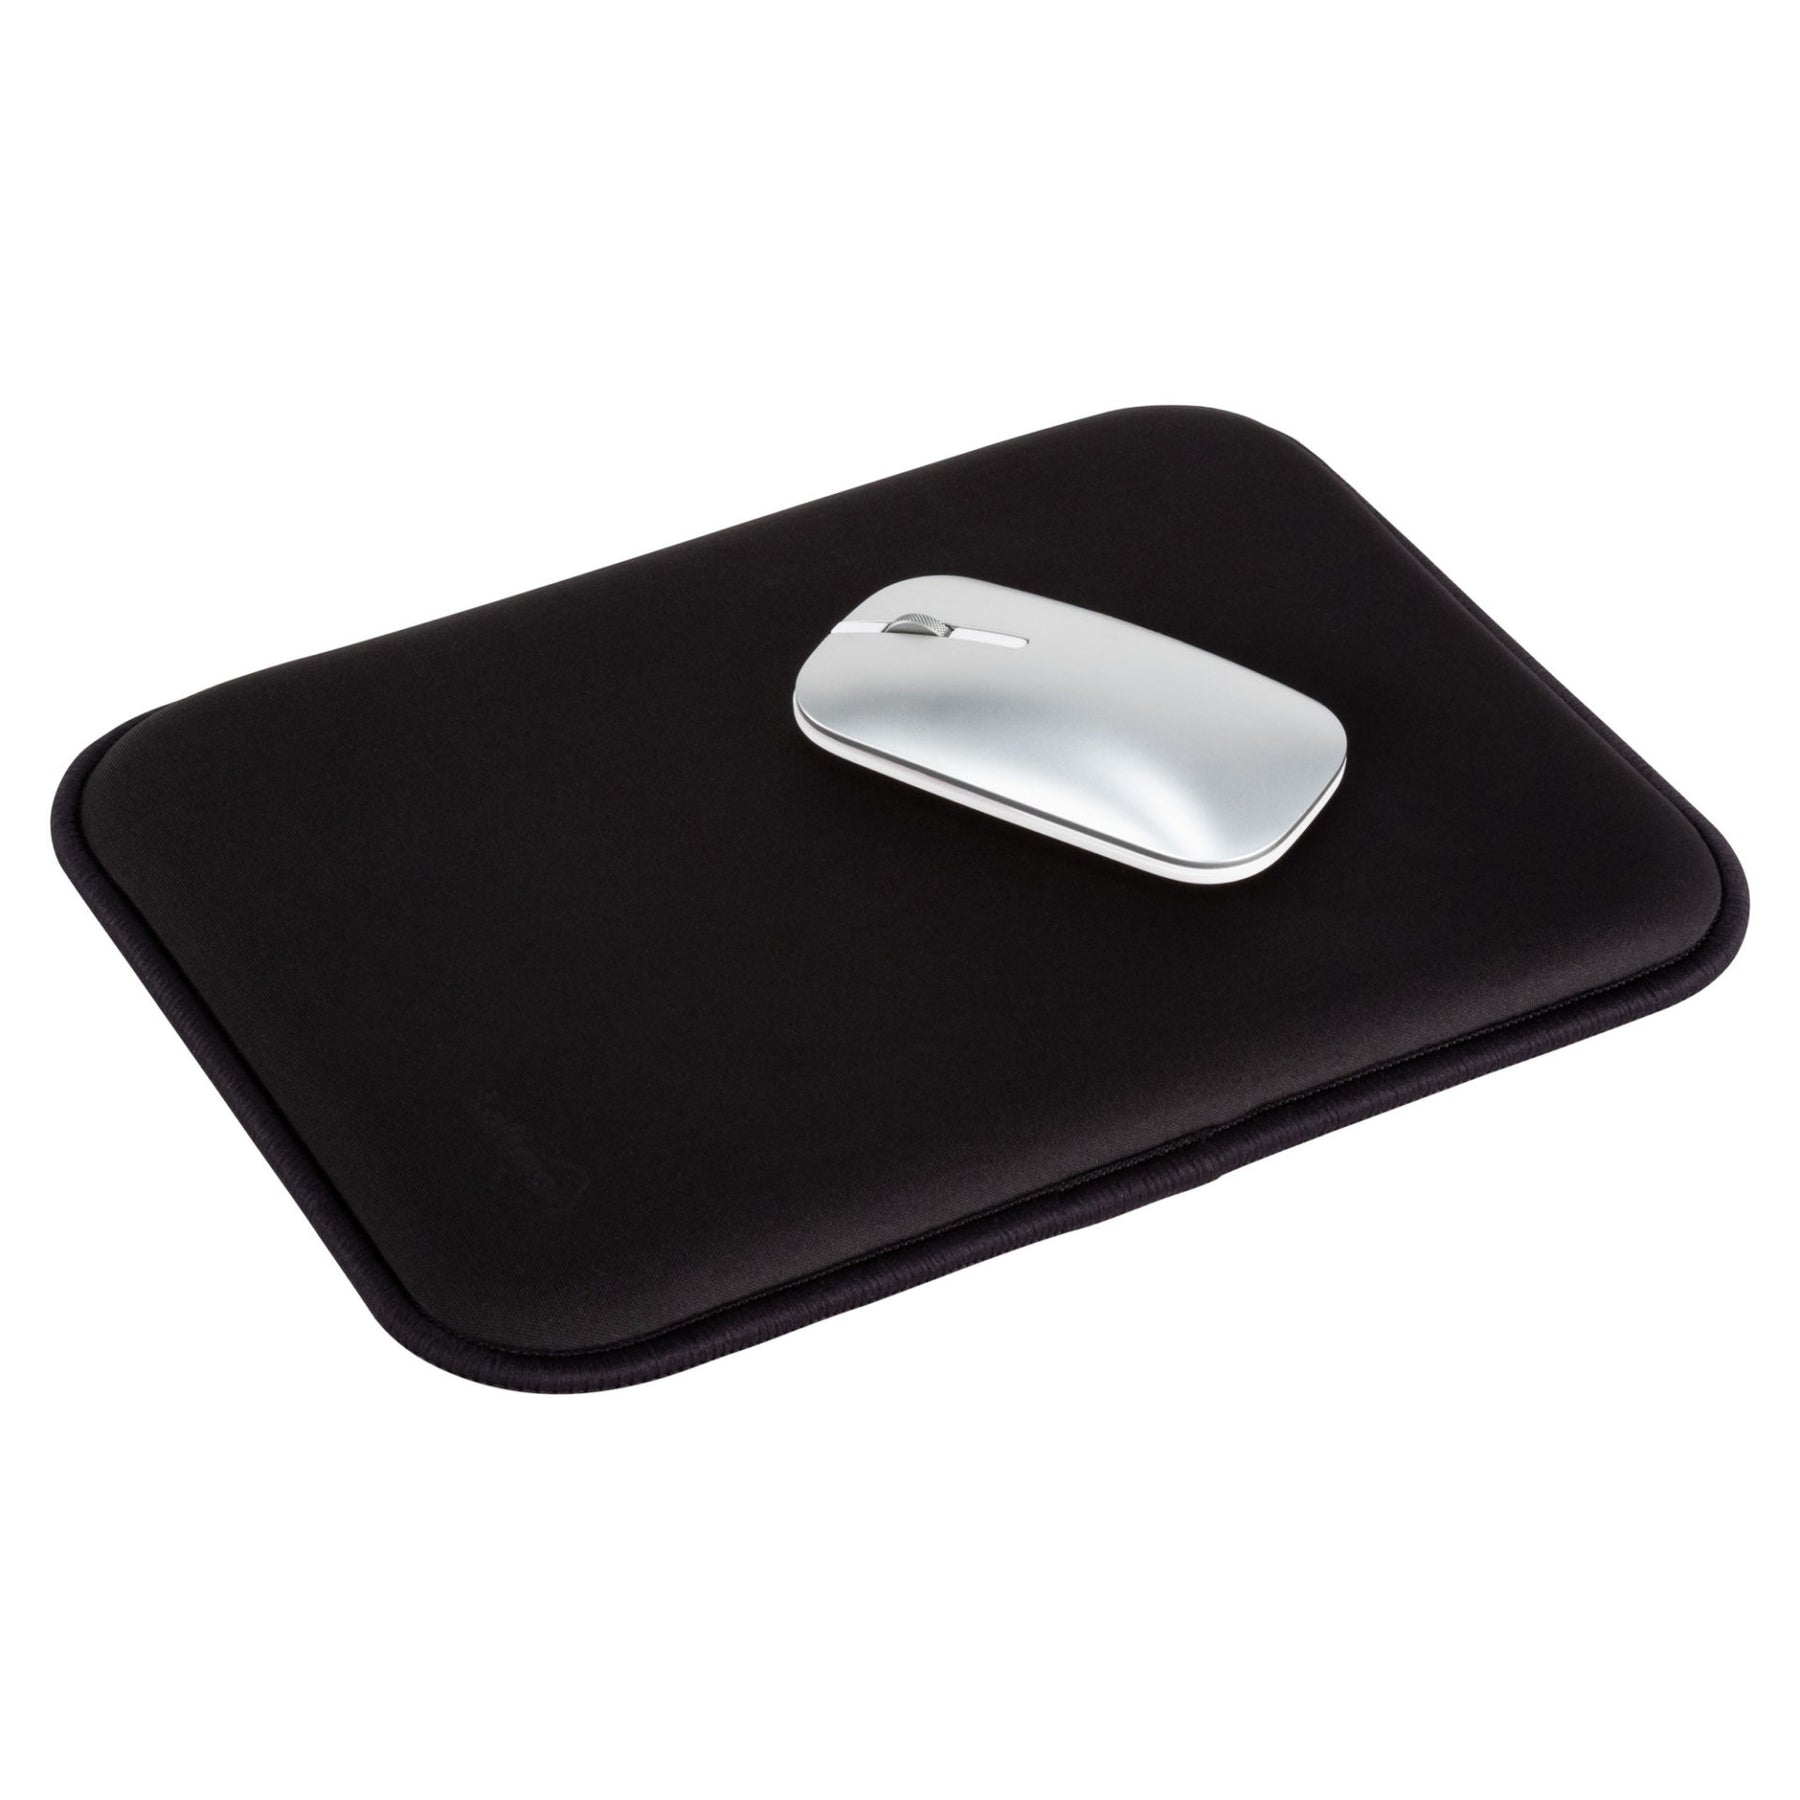 Allsop Ergoedge Deskpad W/Large Wrist Rest and Mousing Surface Foam